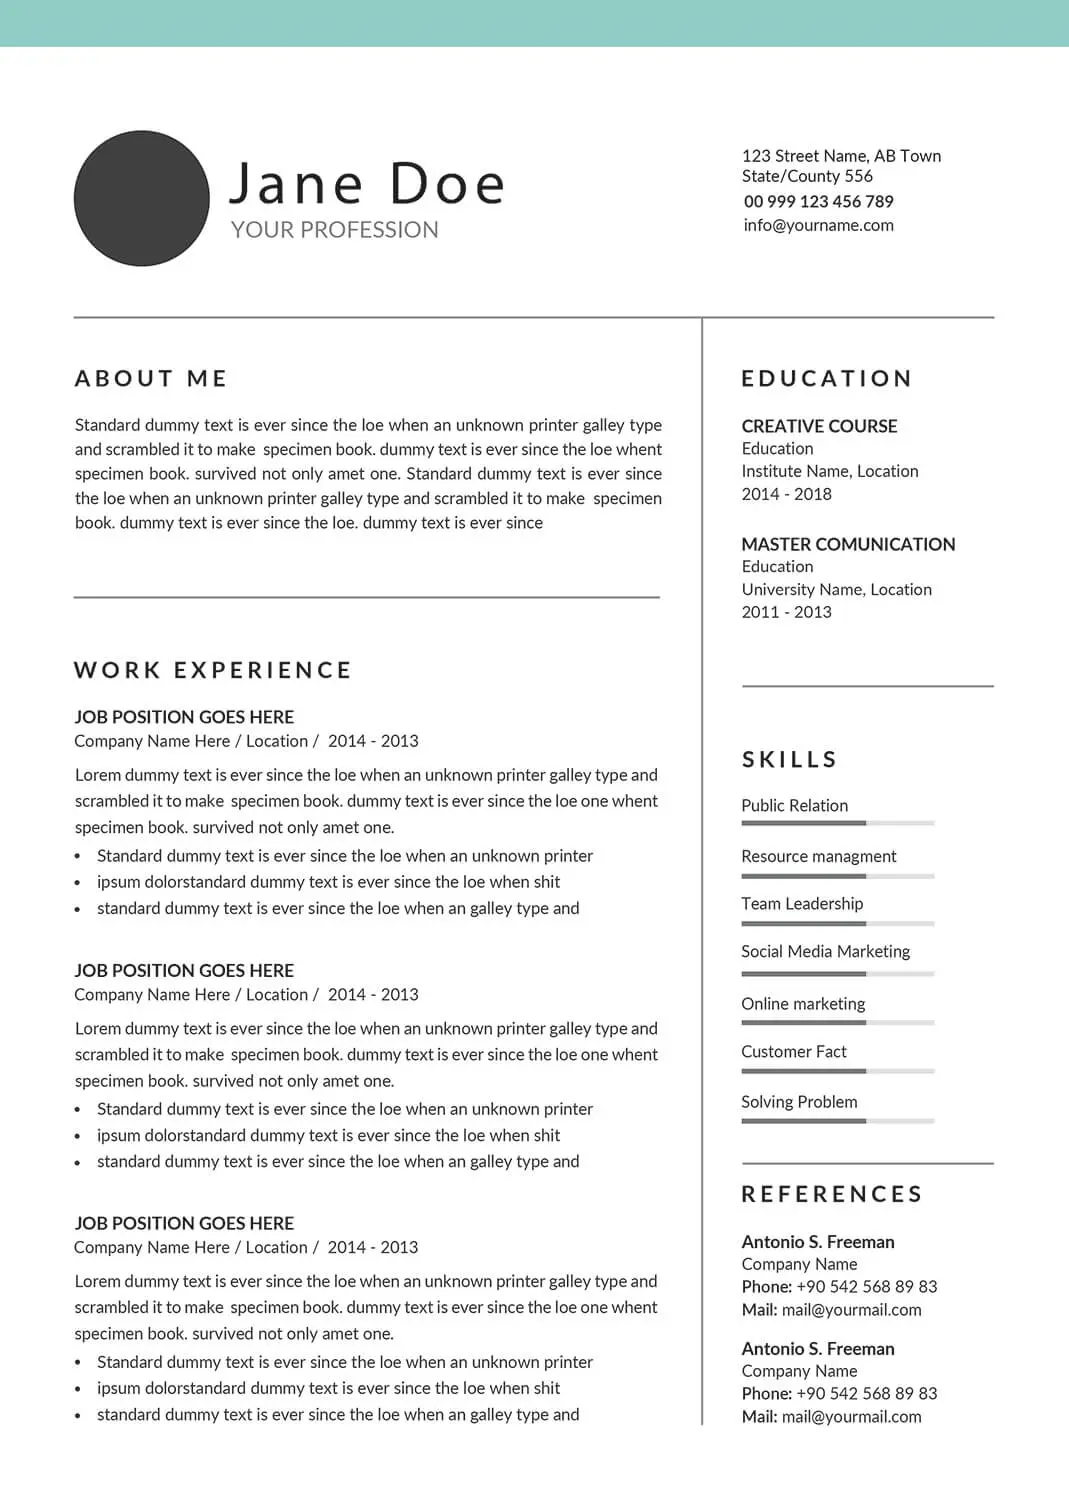 managing-director-resume